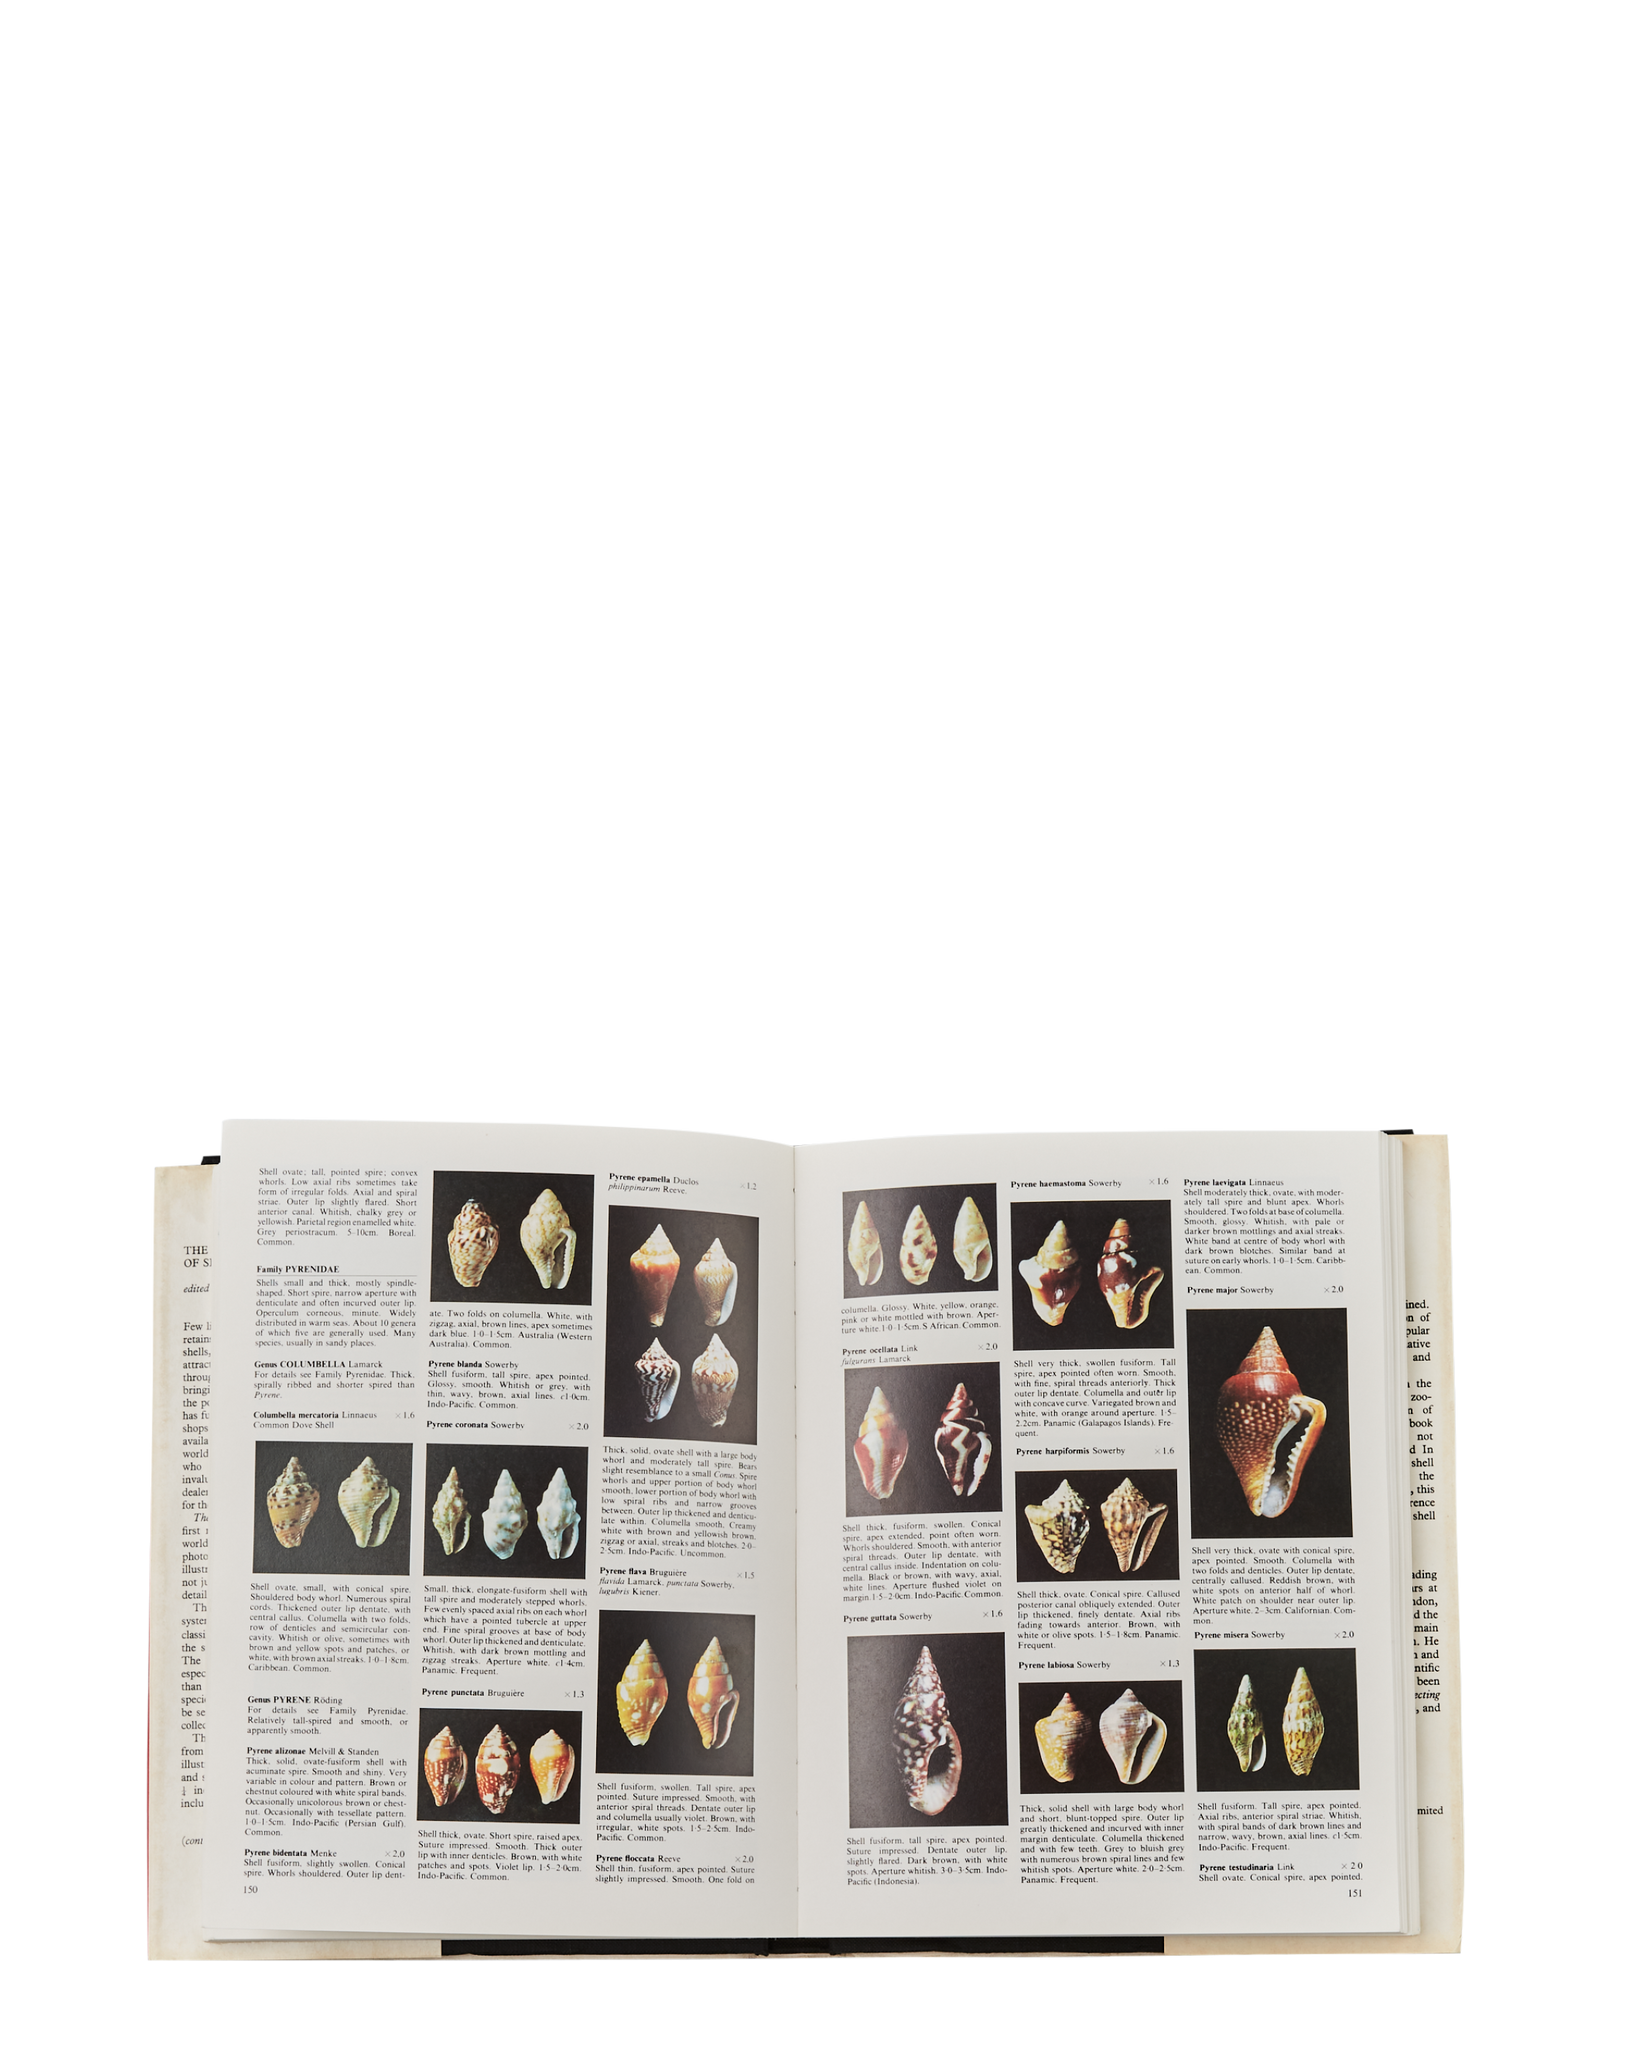 The Collectors Encyclopedia of Shells